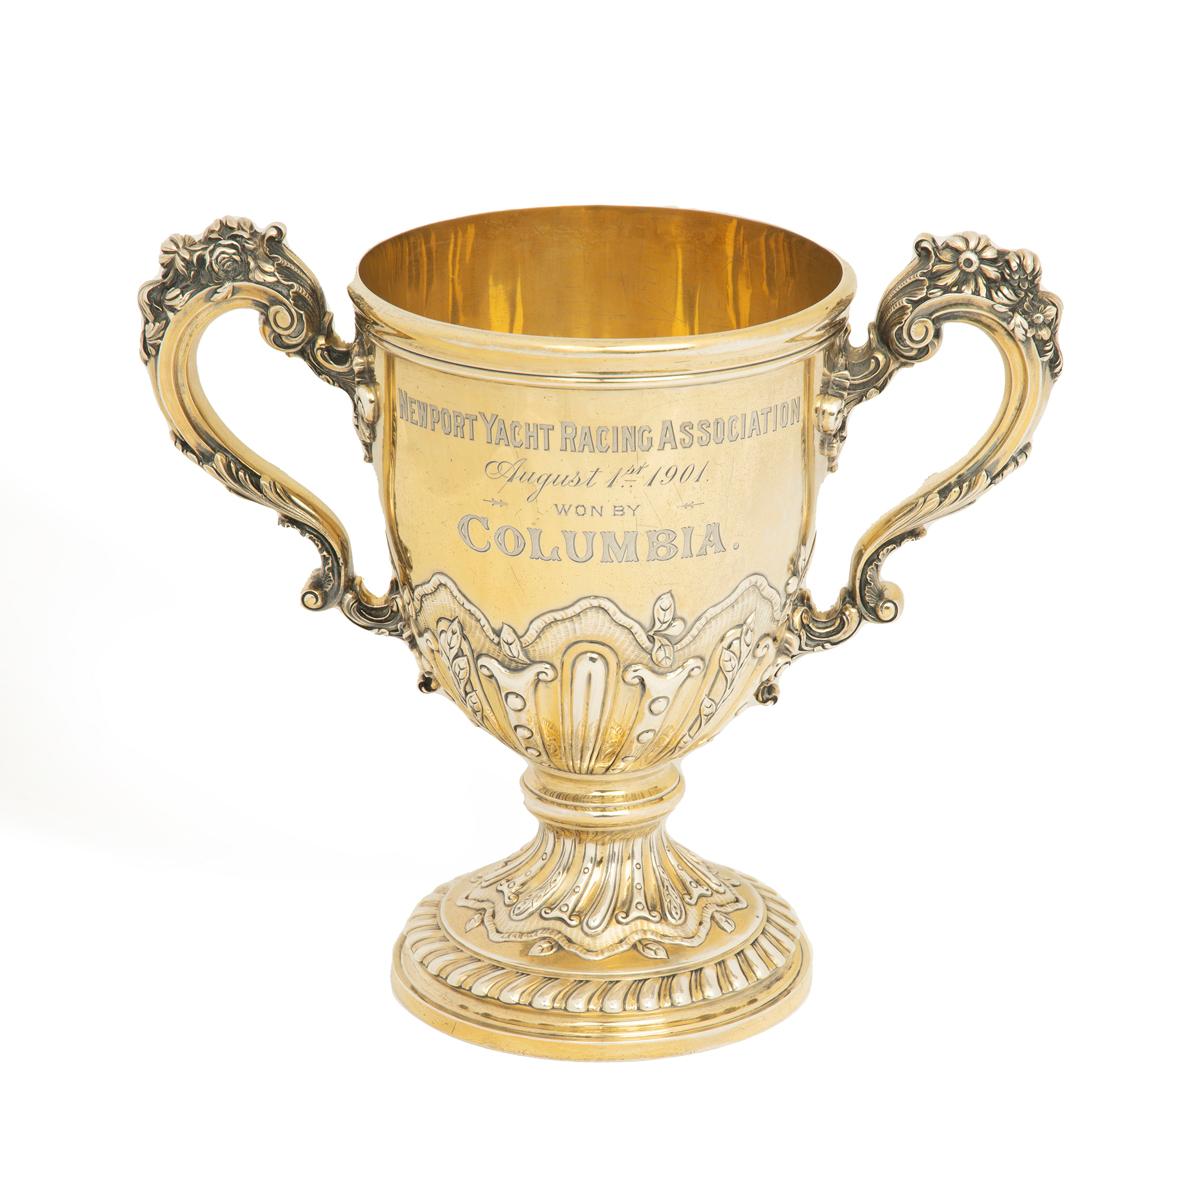 American A silver gilt Newport Yacht Racing Association won by Columbia, 1901